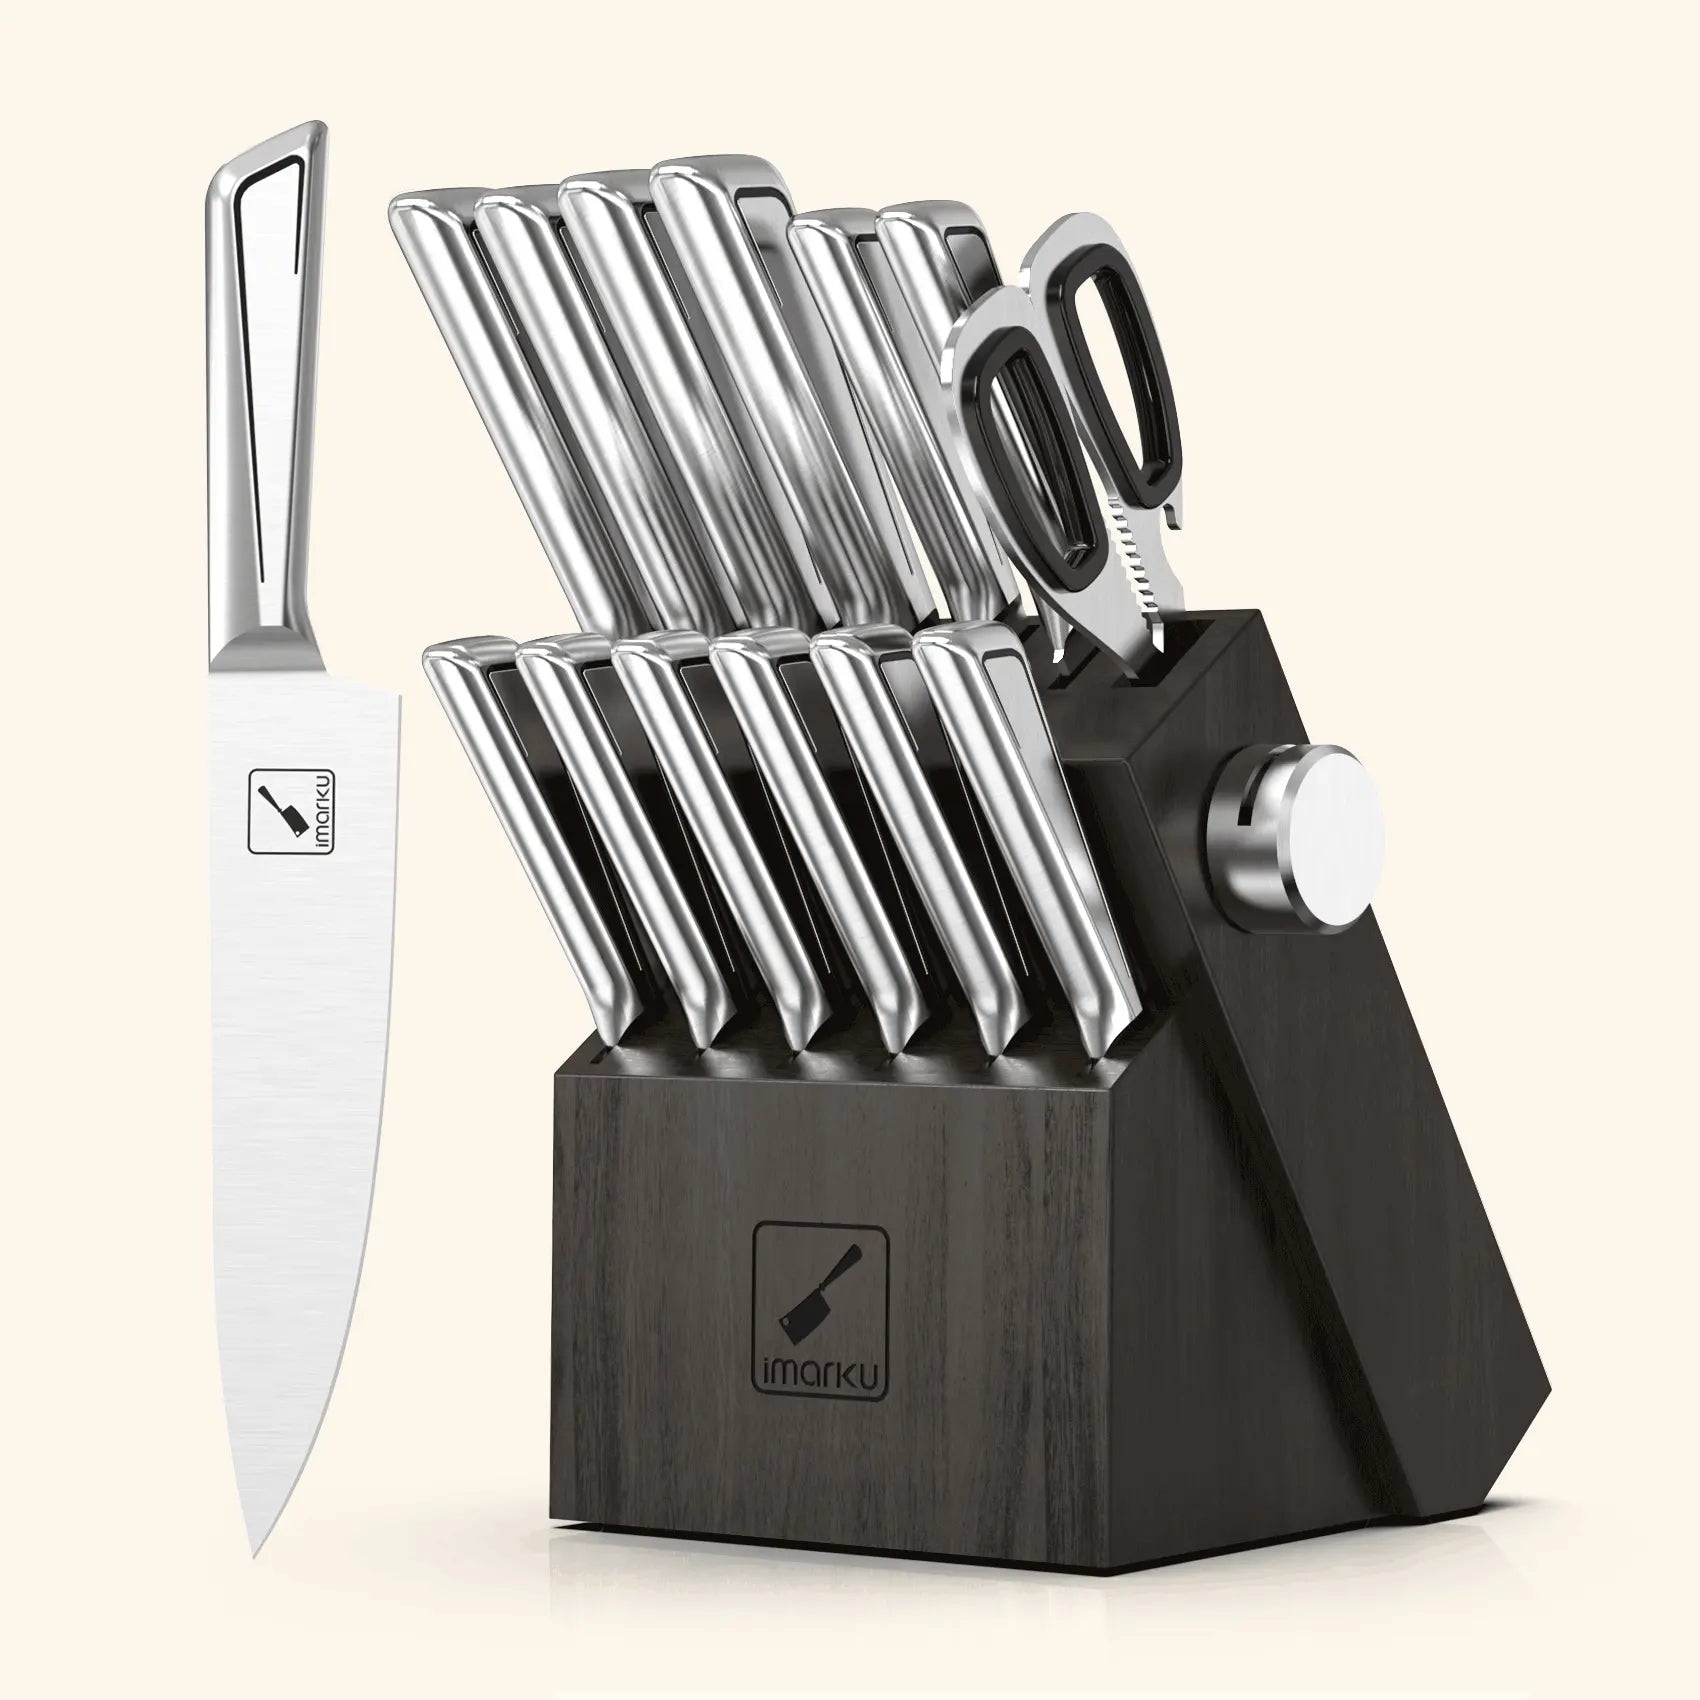 Knife Set,imarku 14-Piece Knife … curated on LTK